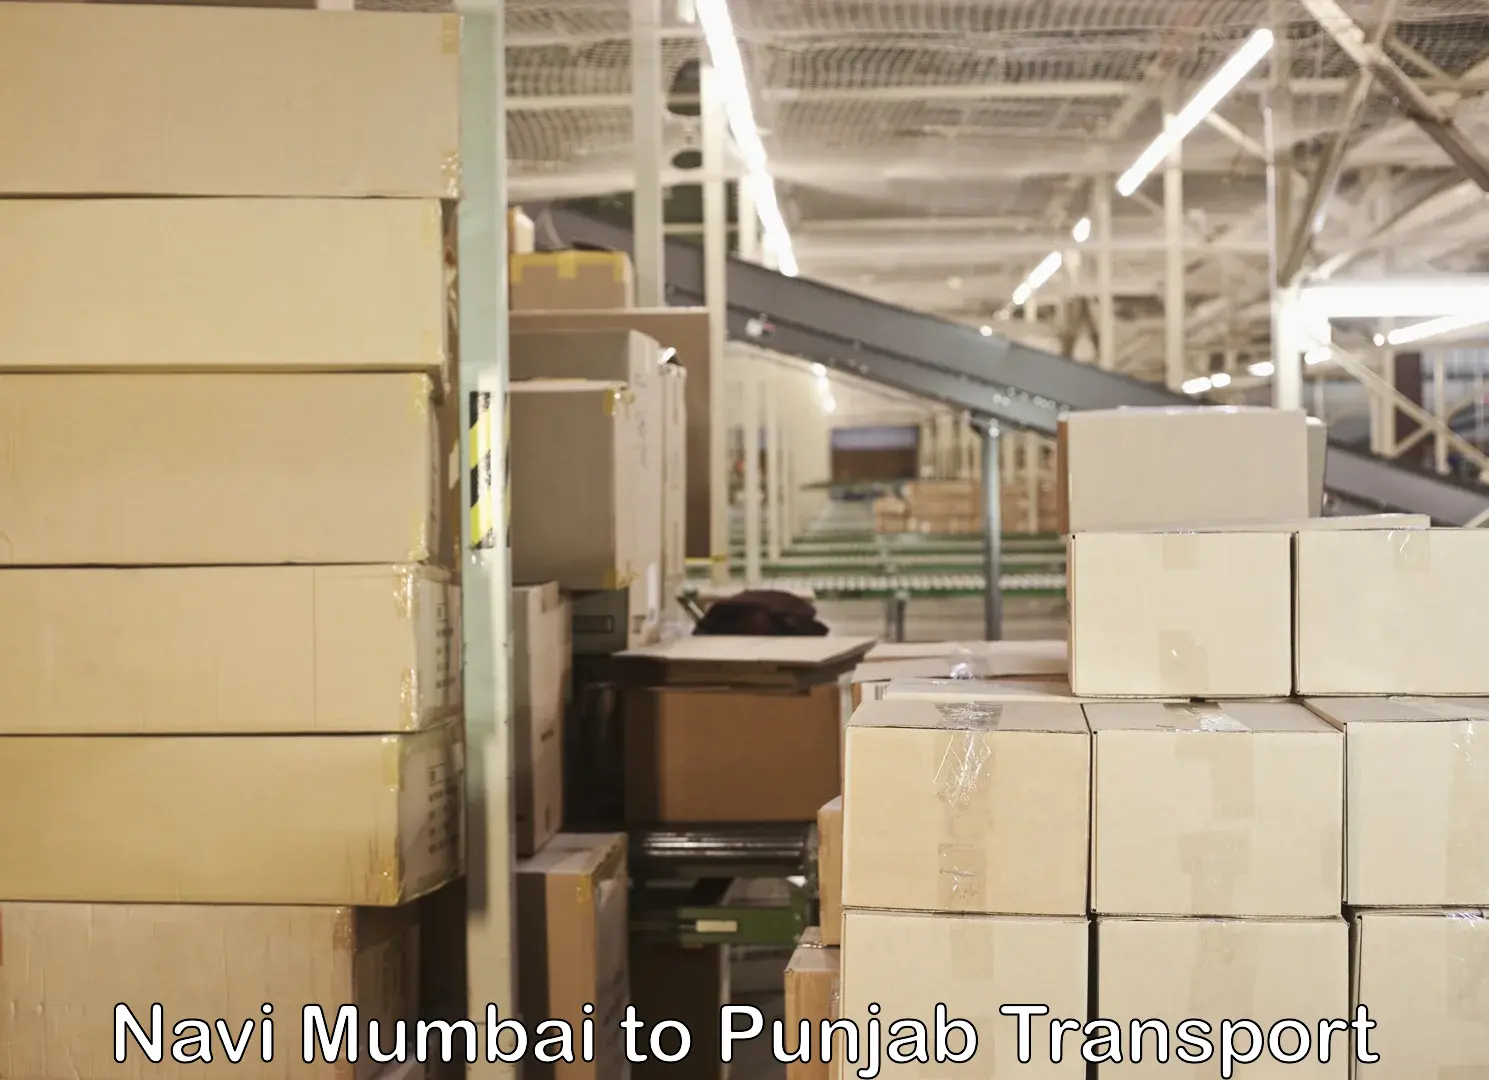 Truck transport companies in India Navi Mumbai to Punjab